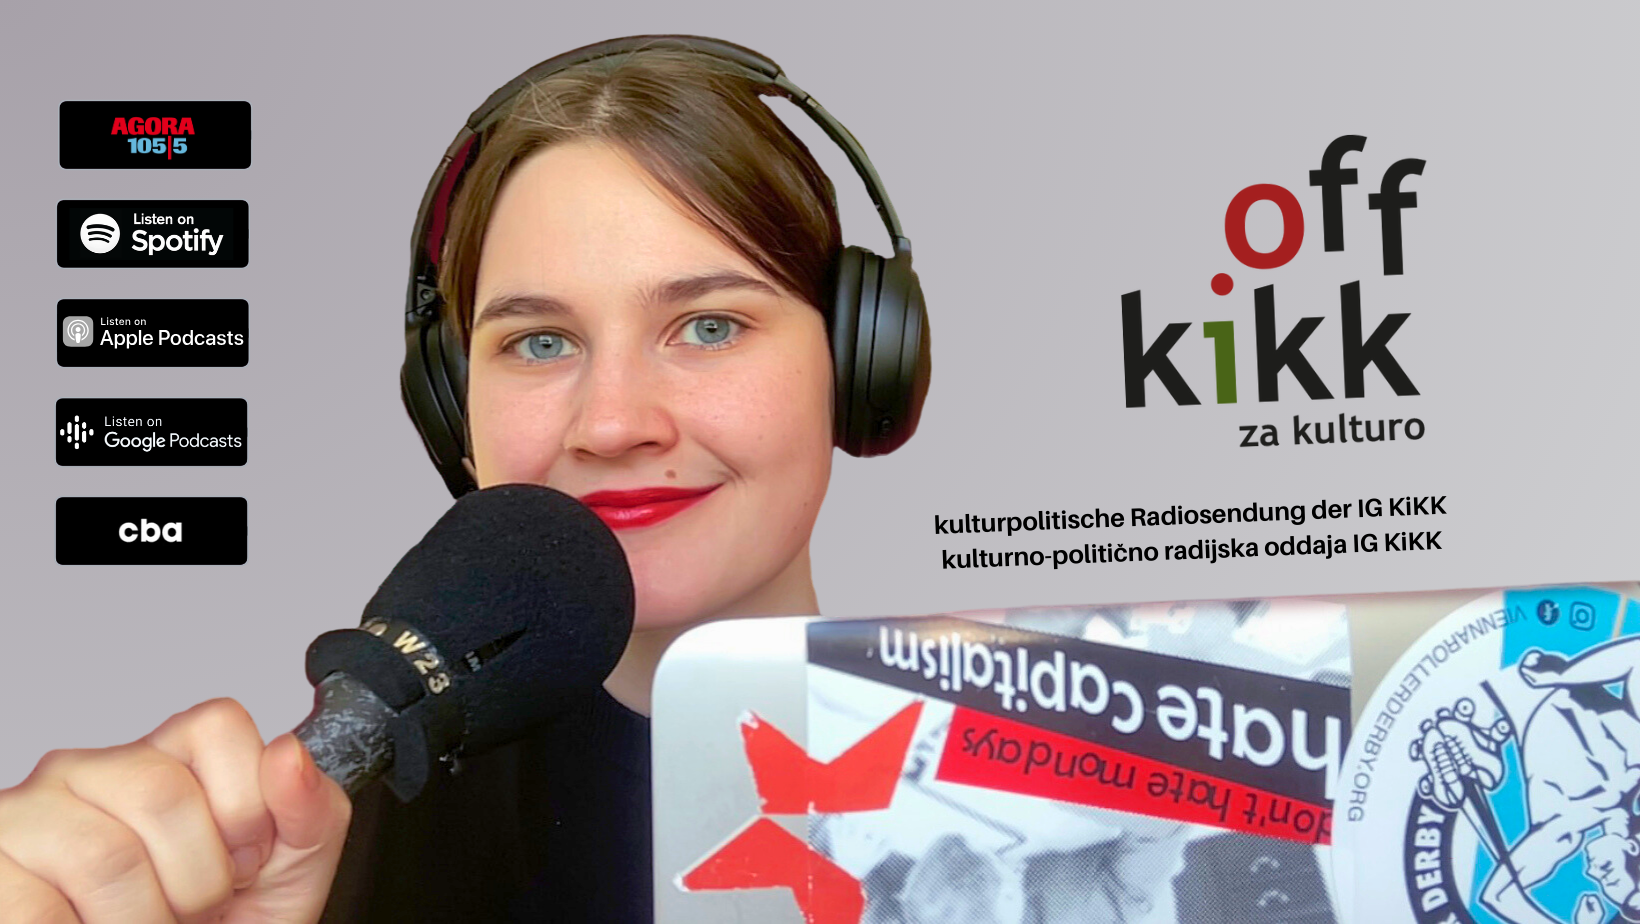 Die kulturpolitische Radiosendung der IG KiKK mit Ana Grilc | Kulturno politischno radijska oddaja